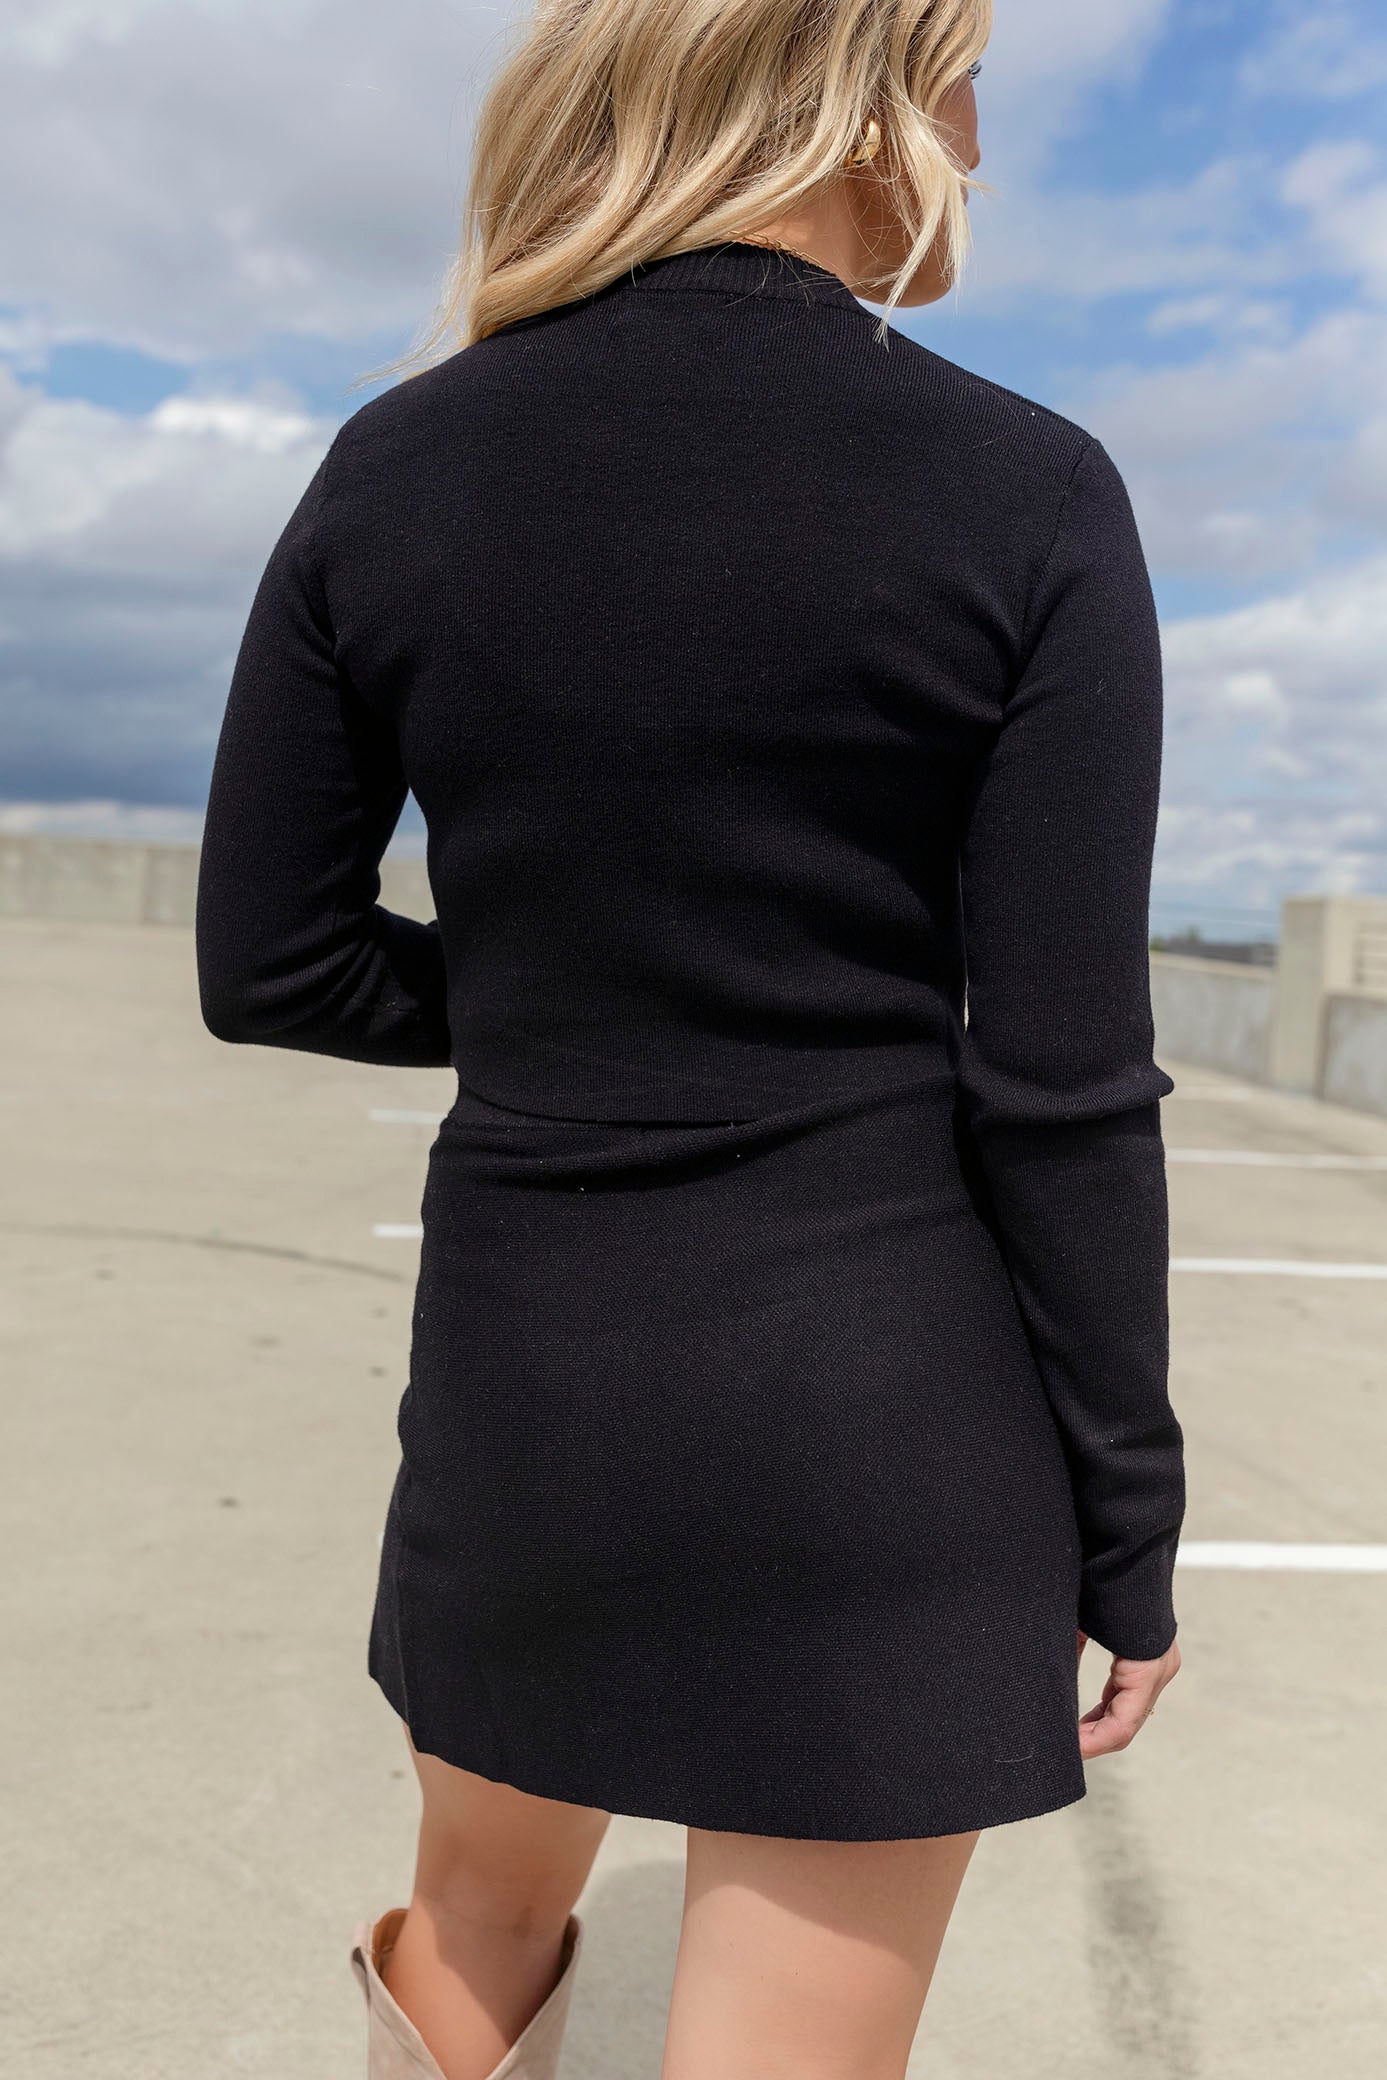 (Small, Medium, Large)Black Sweater Crop Top/Skirt Set